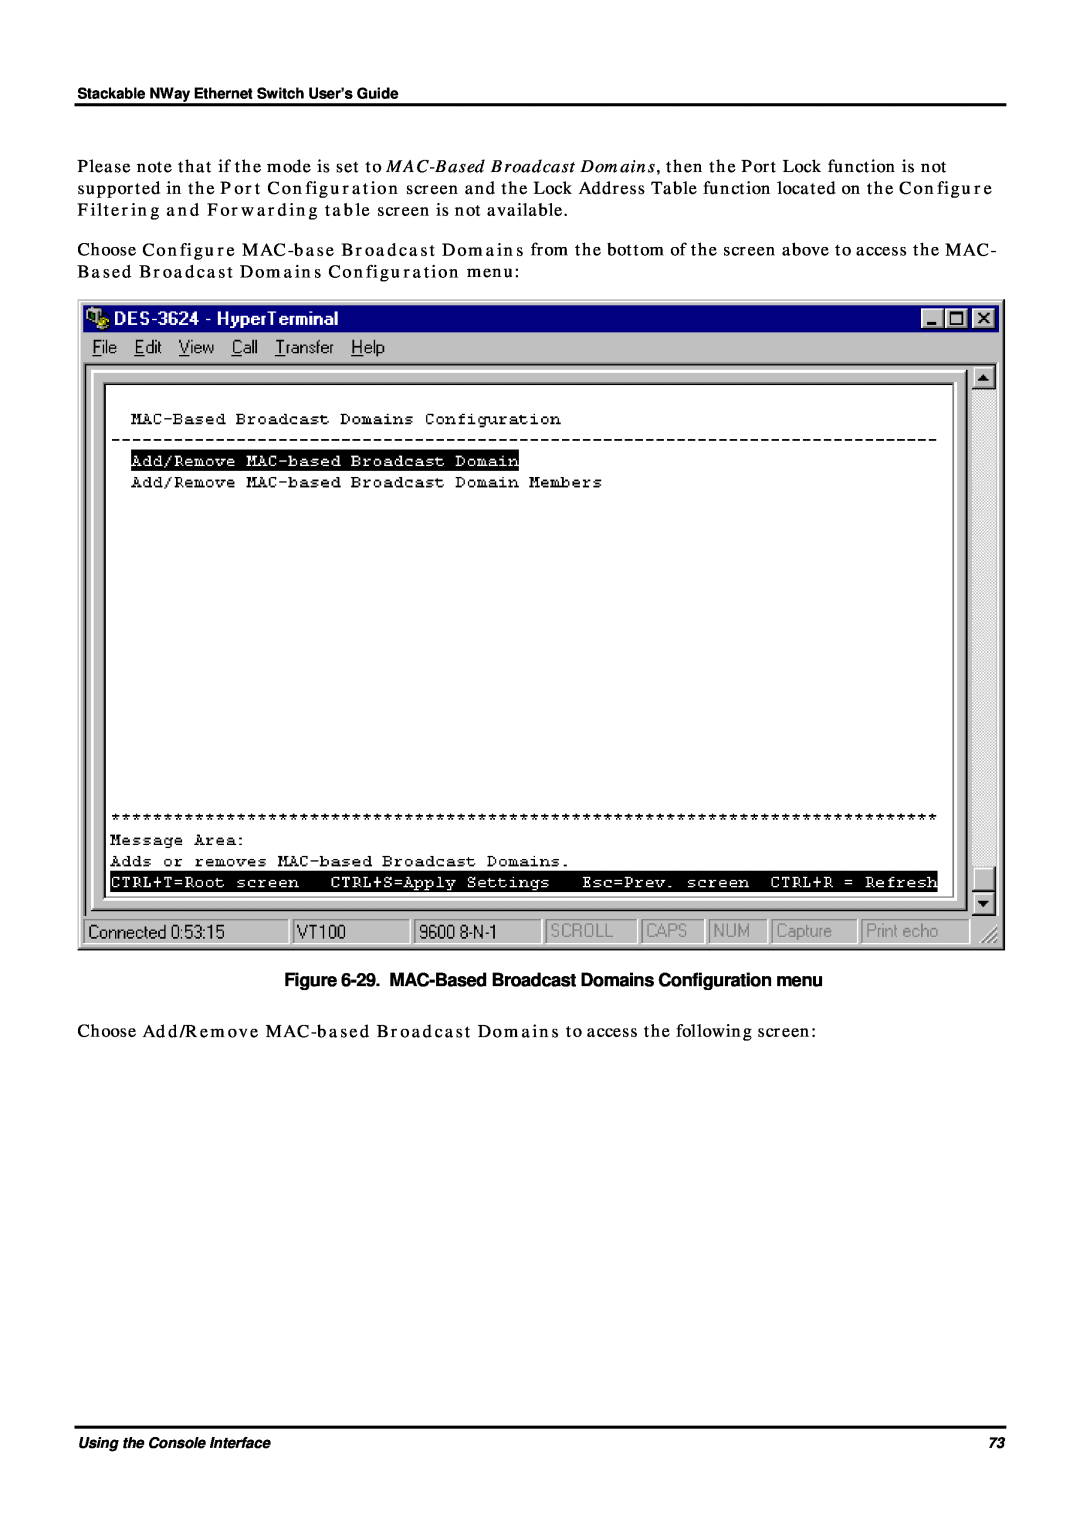 D-Link DES-3624 manual 29. MAC-Based Broadcast Domains Configuration menu 